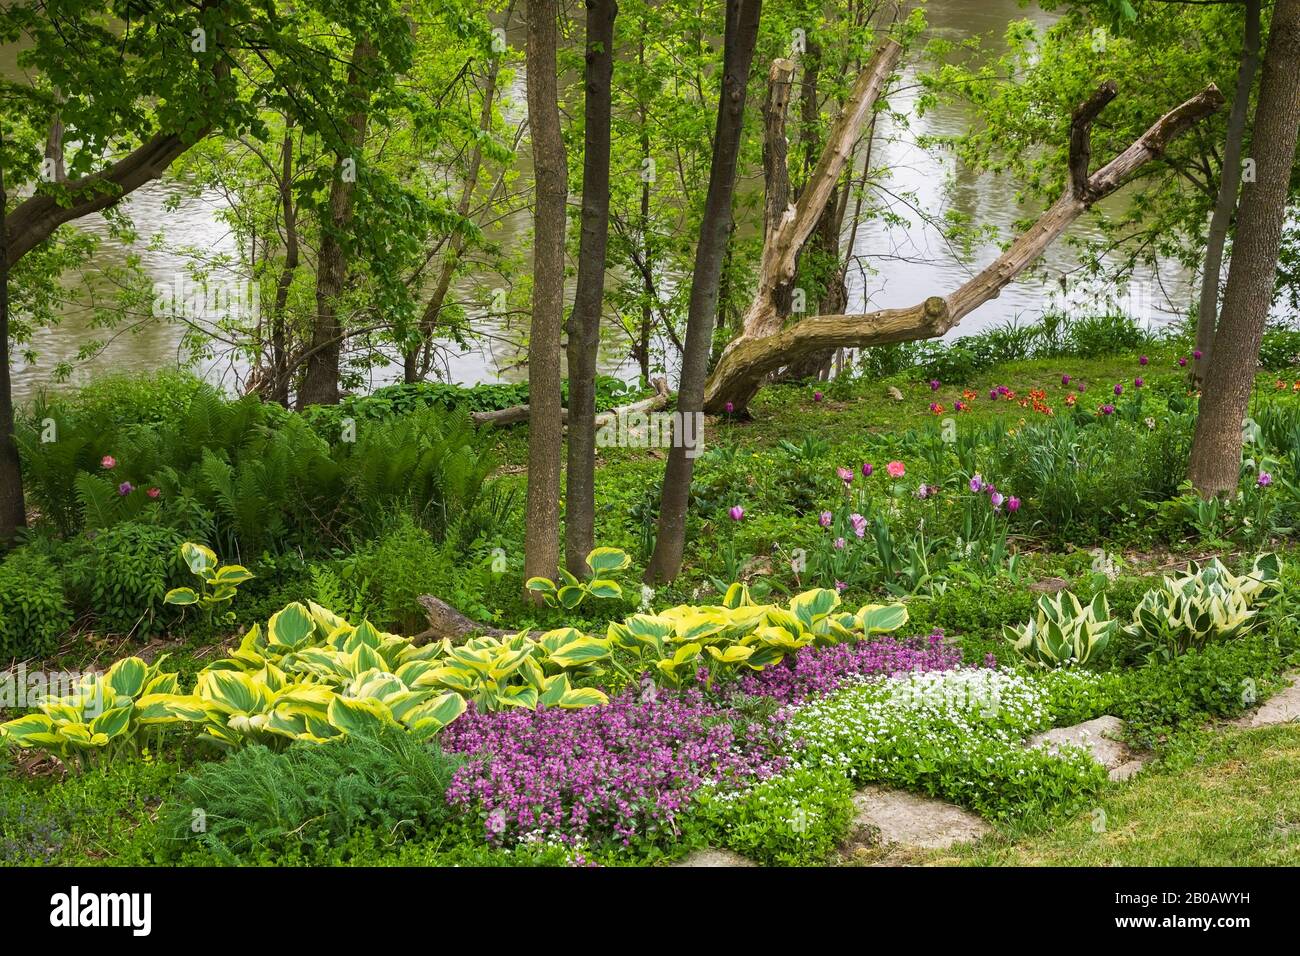 Garden border with white Asperula odorata - Woodruff flowers, purple Lamium, - Deadnettle and Hosta plants in sloped backyard garden in spring. Stock Photo